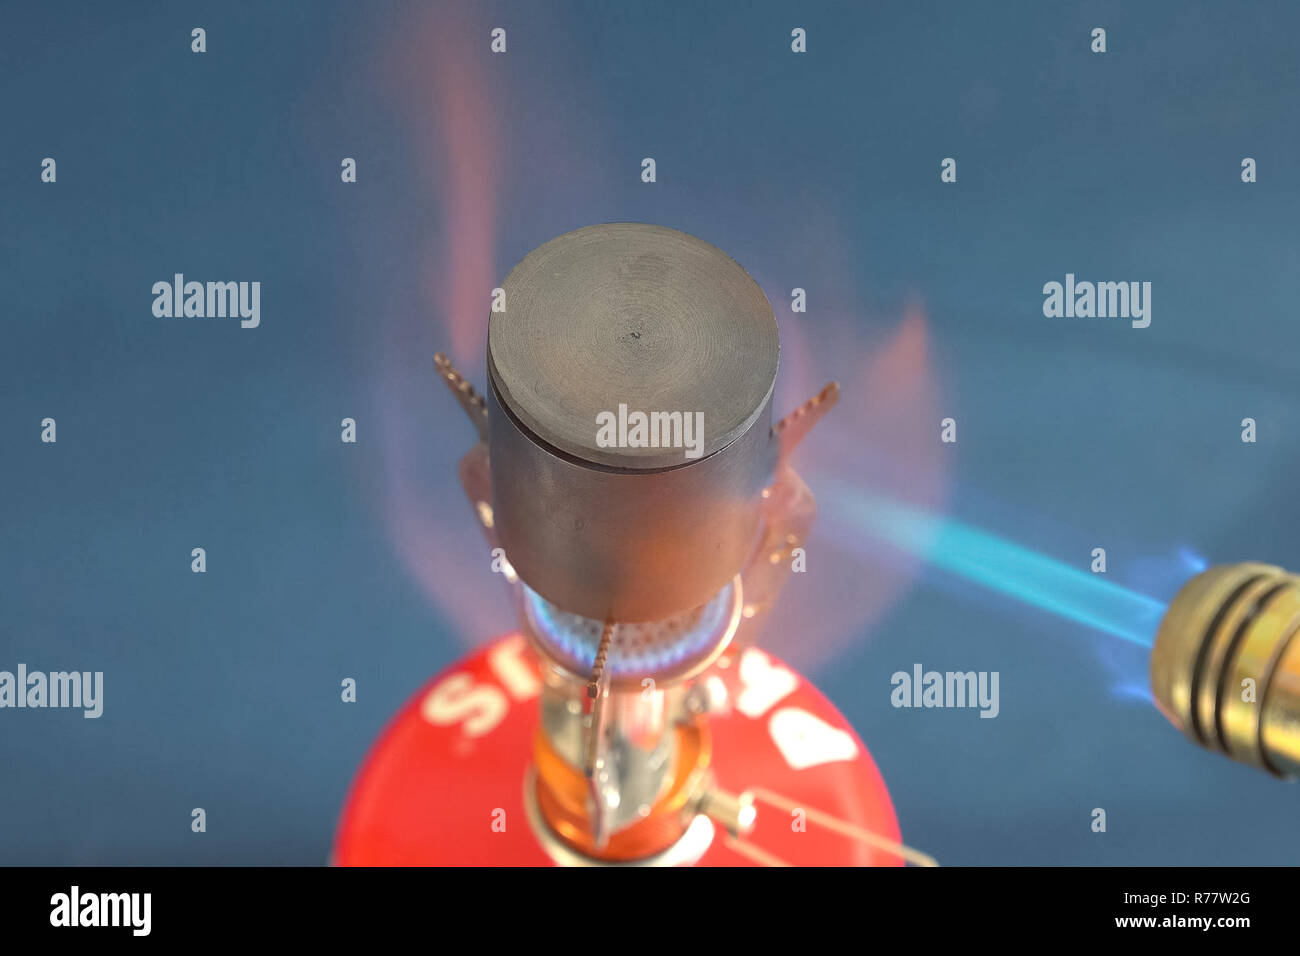 Melting of aluminum on the burner. Conducting physical experiments with aluminum Stock Photo